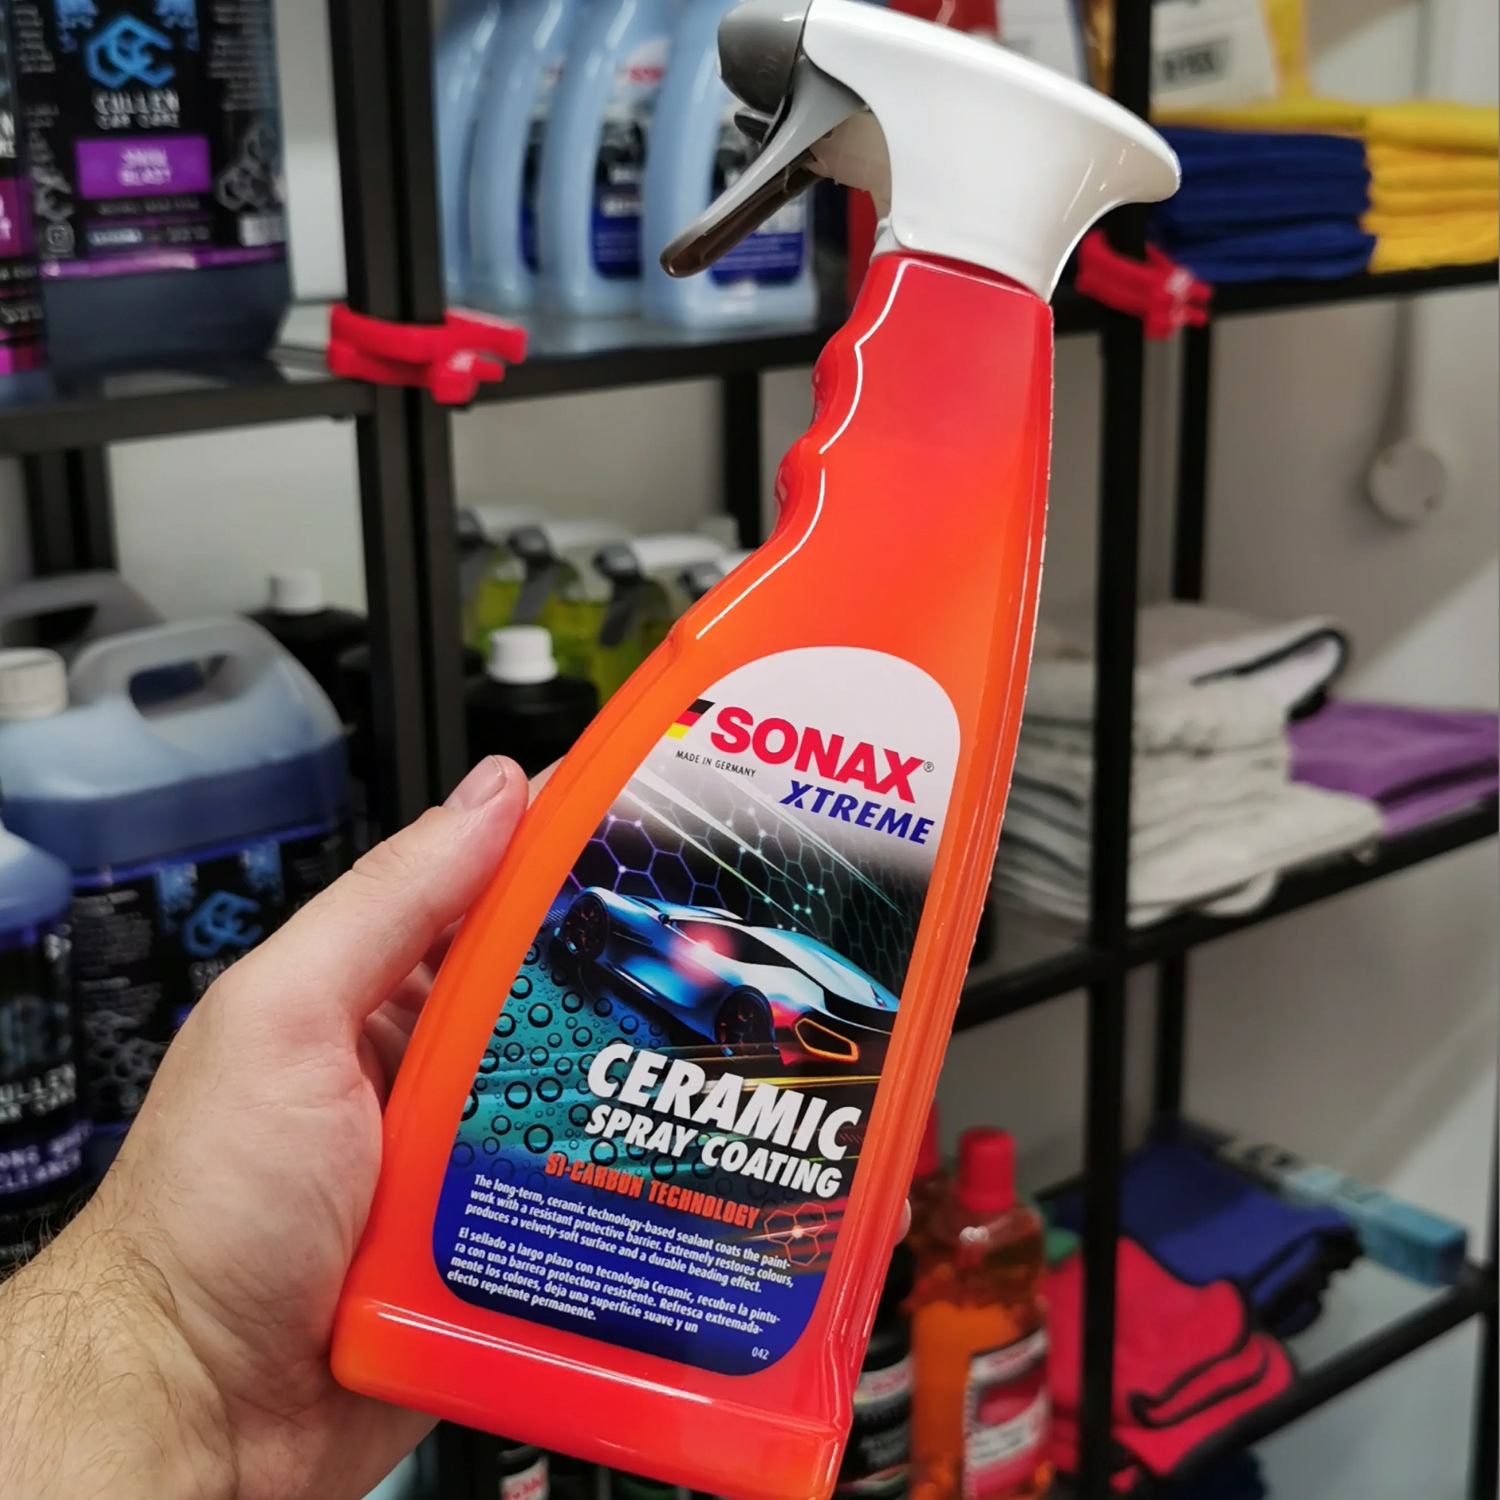 SONAX Ceramic Spray Coating 750ml